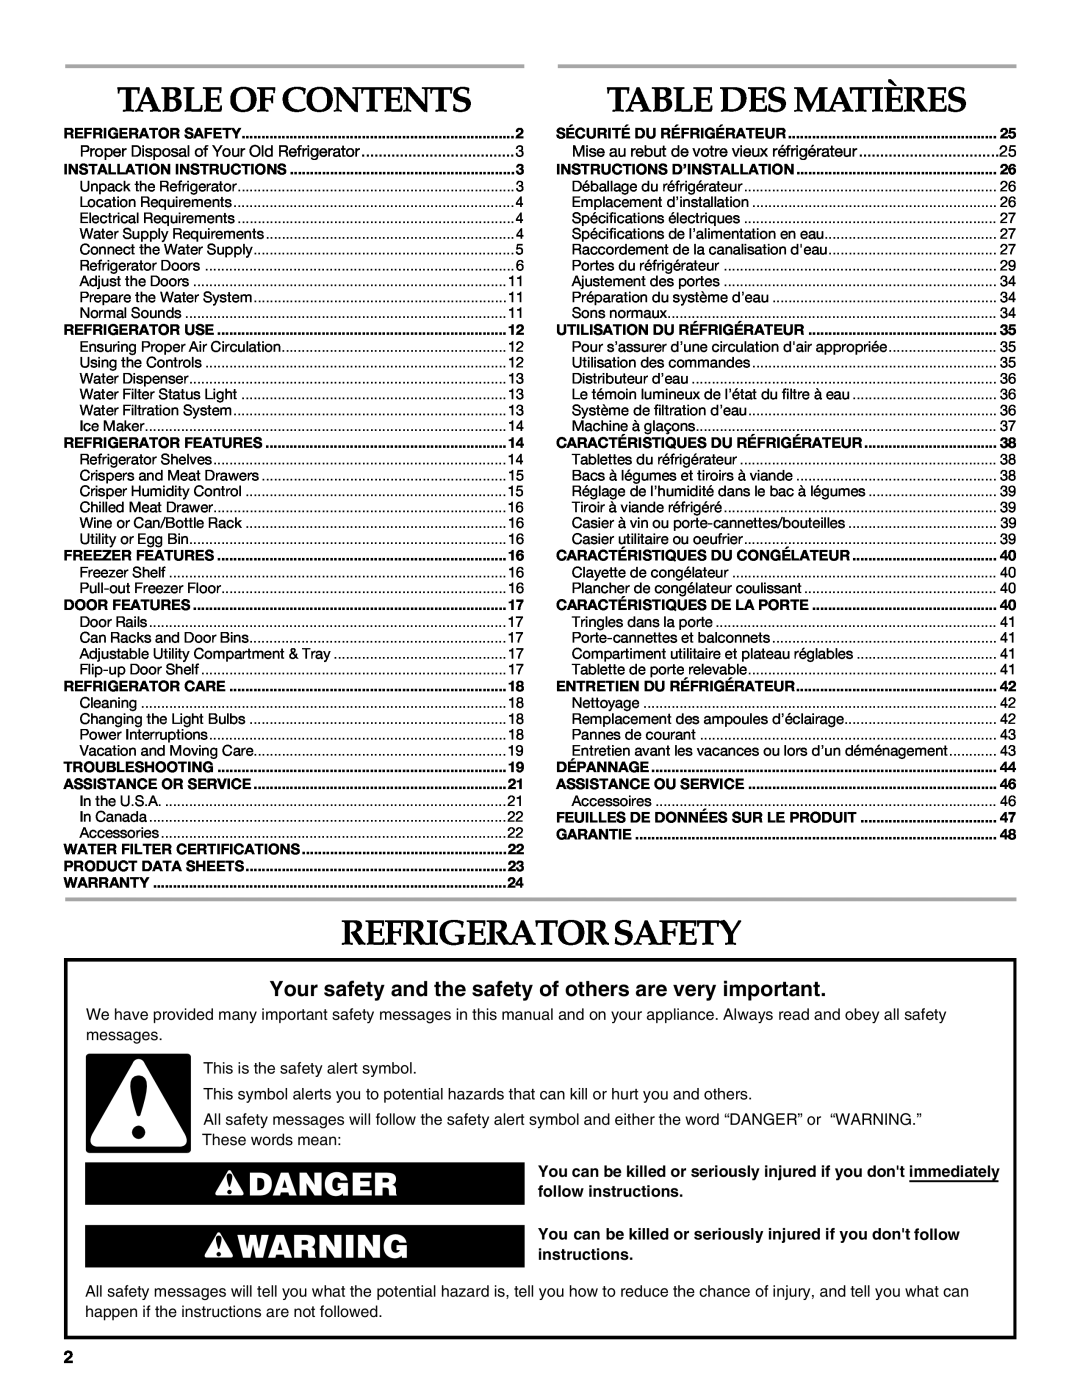 KitchenAid TOP-MOUNT REFRIGERATOR manual Table Des Matières, Refrigeratorsafety, Danger, Table Of Contents 